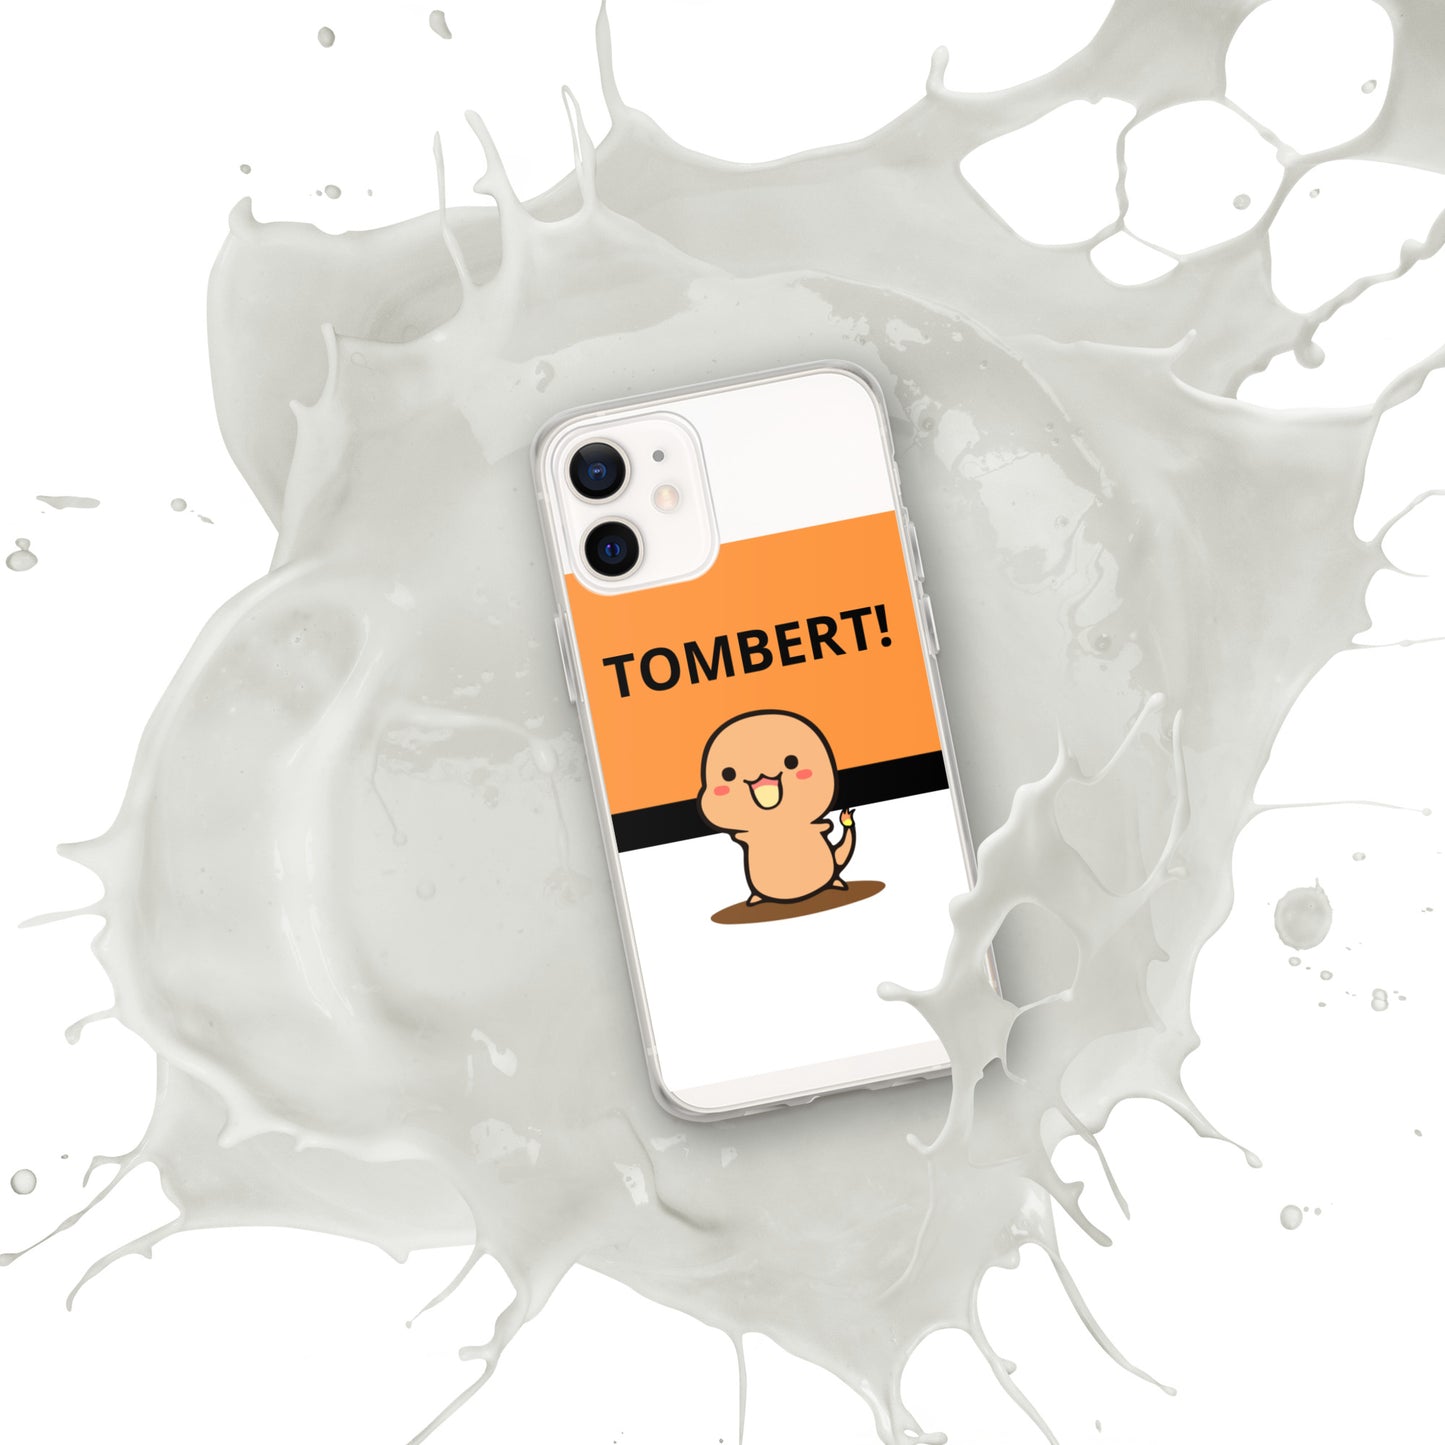 Tombert The iPhone Case!